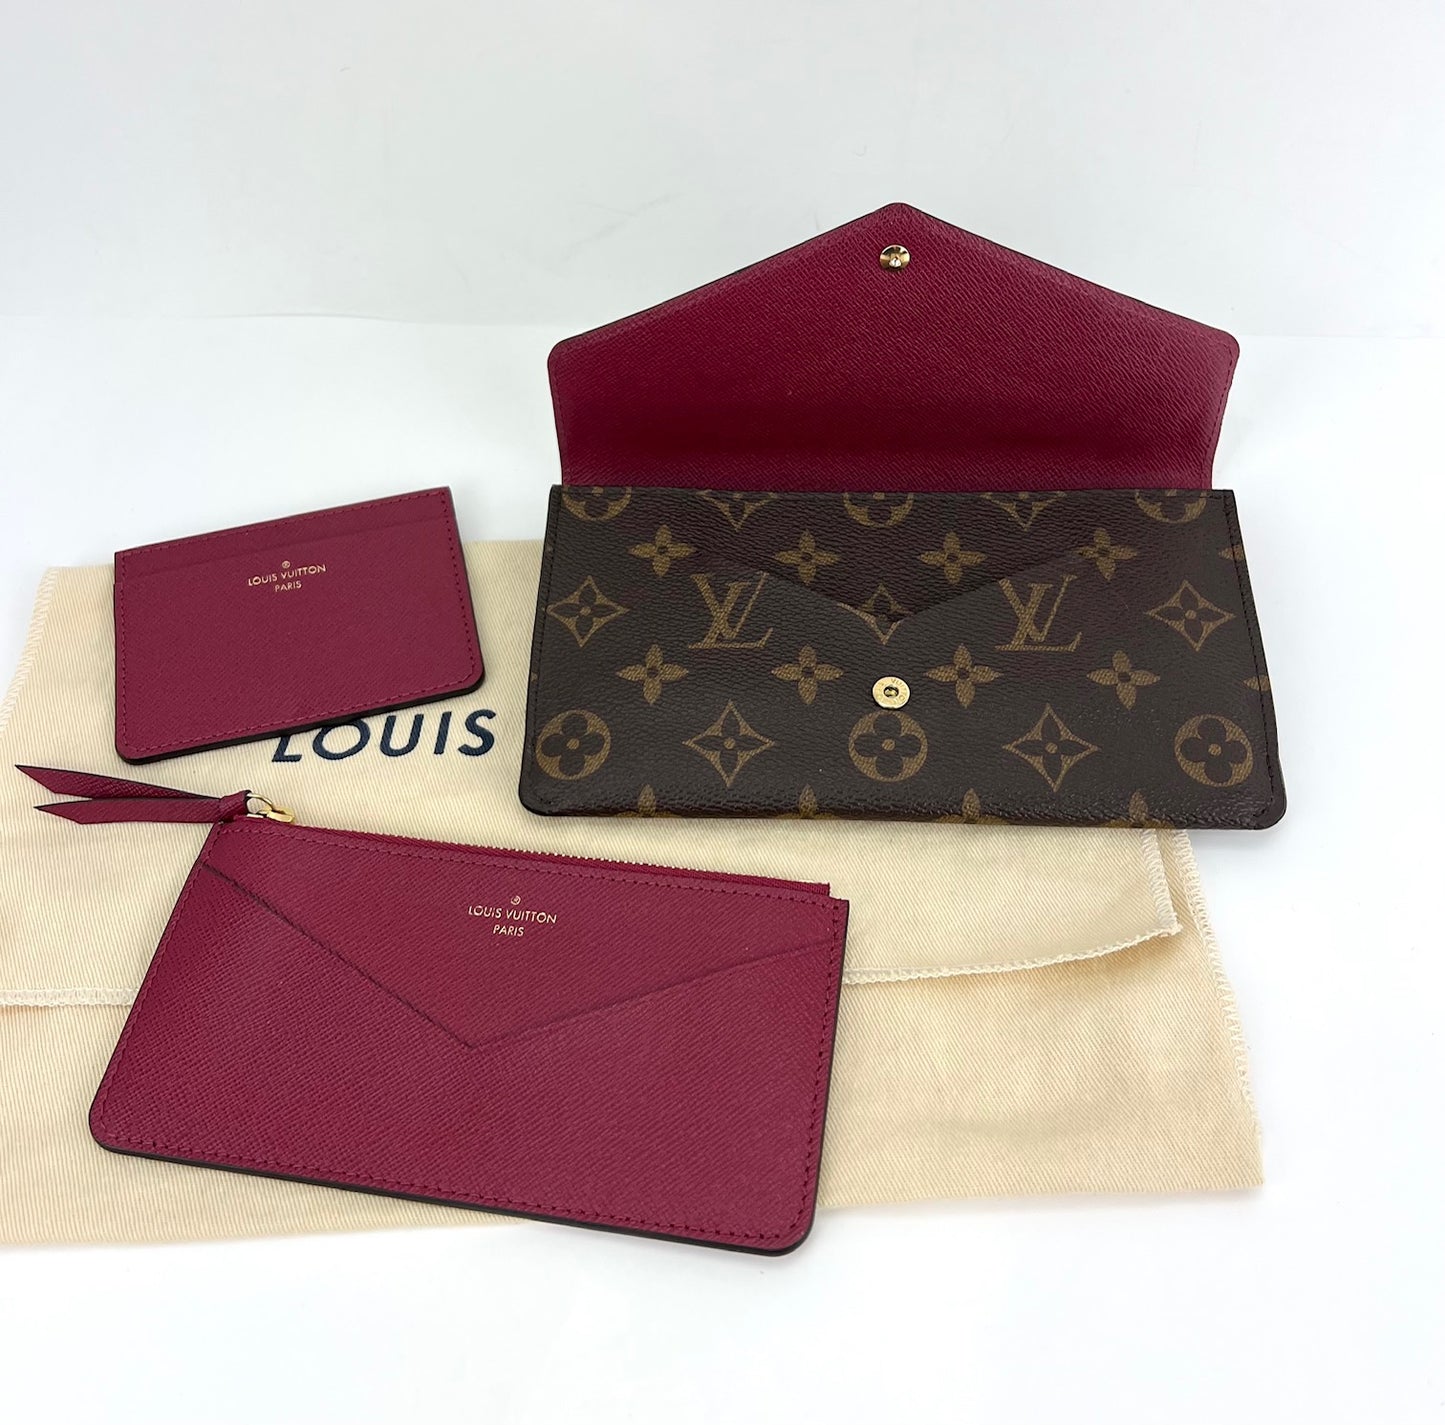 ❌SOLD❌ Louis Vuitton Josephine Monogram Wallet